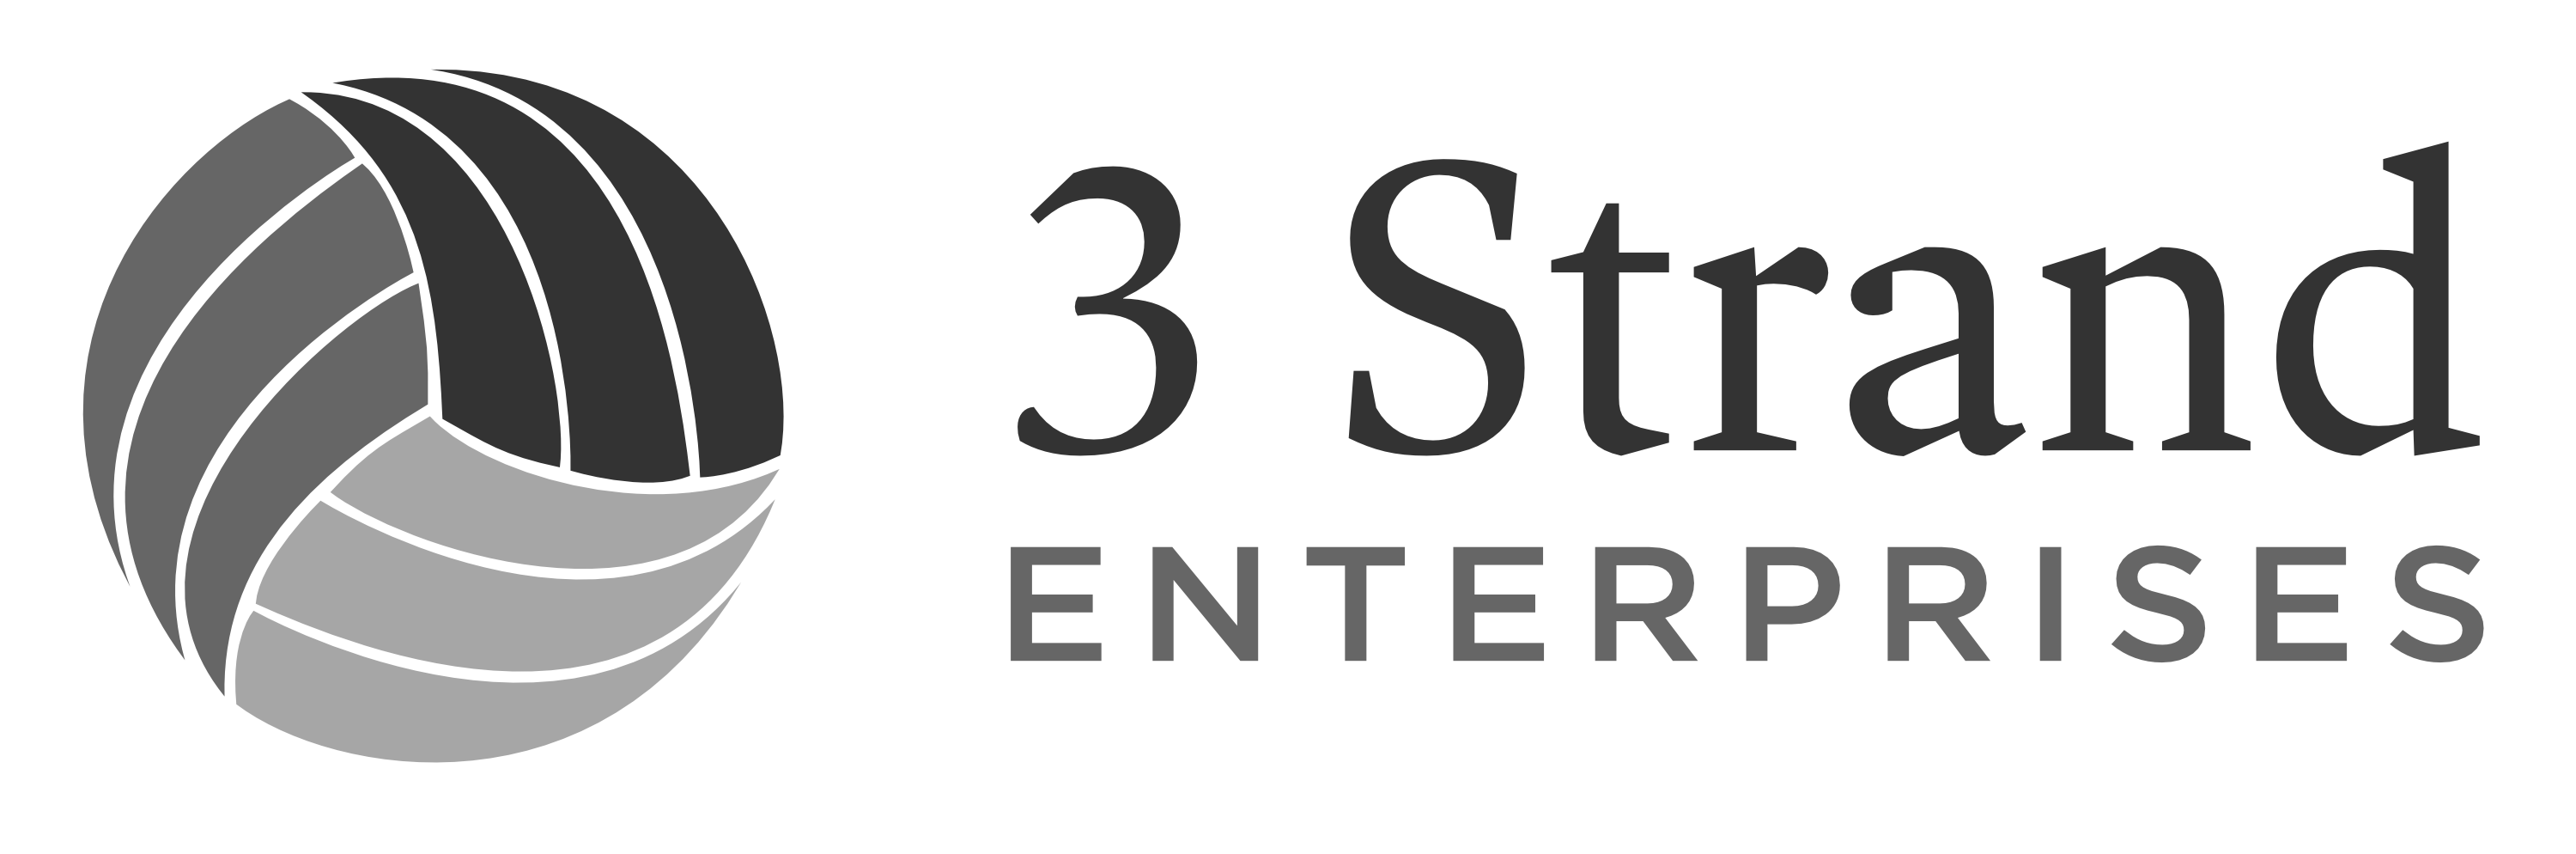 3 Strand Enterprises logo